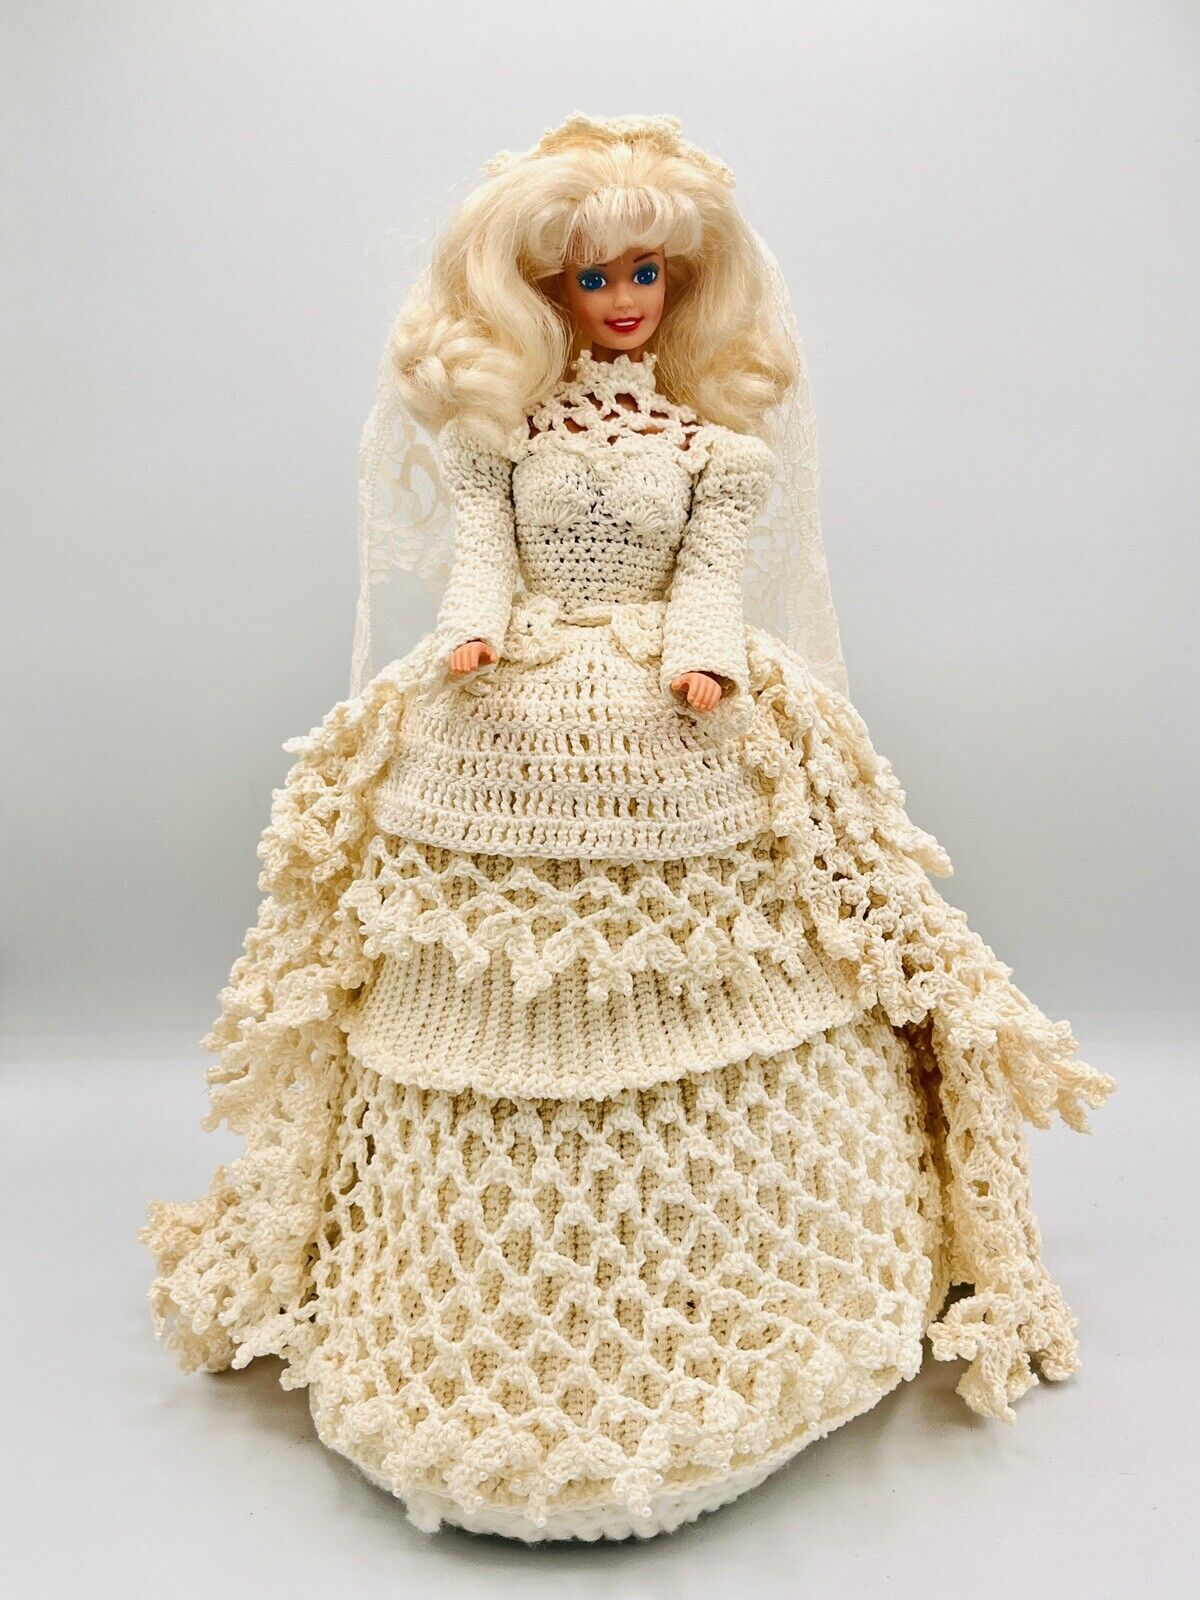 1975 BARBIE BRIDE With  Crochet Wedding Gown DRESS Vintage Barbie Collectible